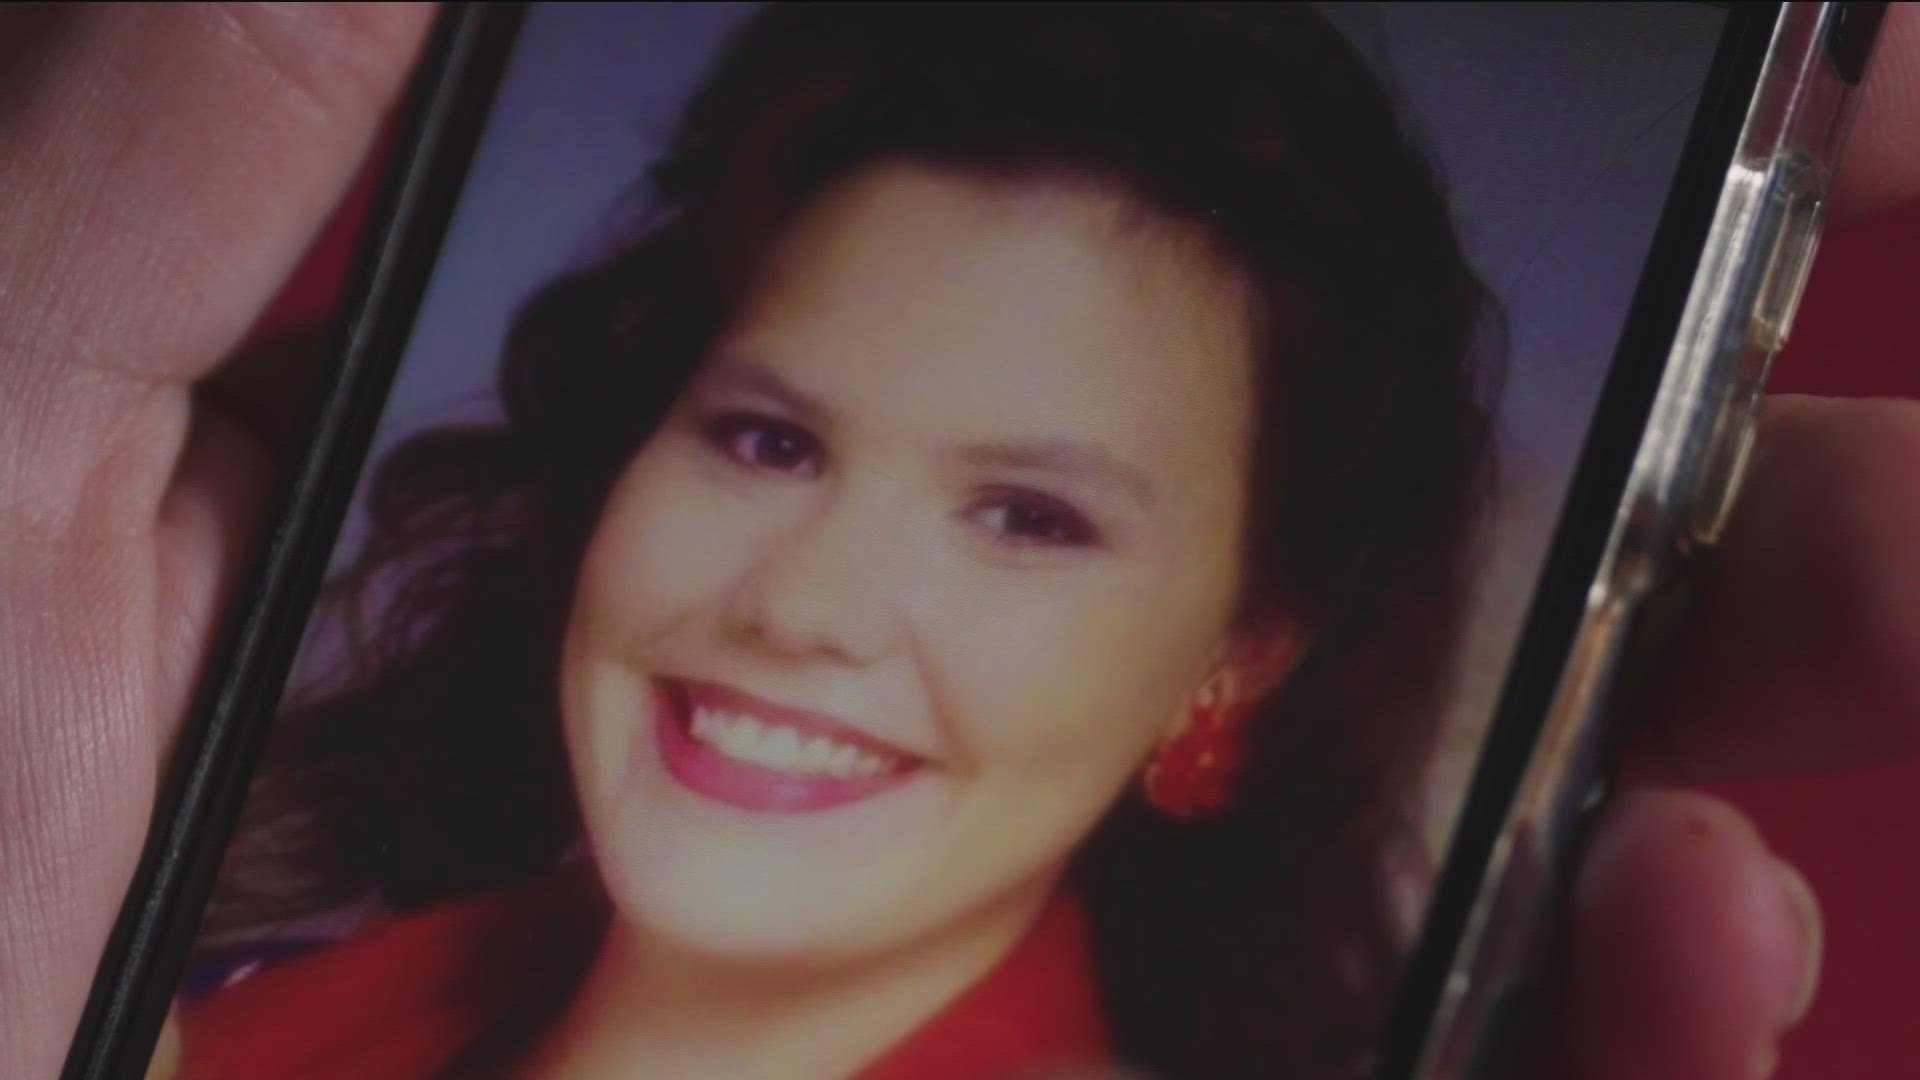 The Atlanta Police Department said that Melissa Wolfenbarger's death is still under investigation.